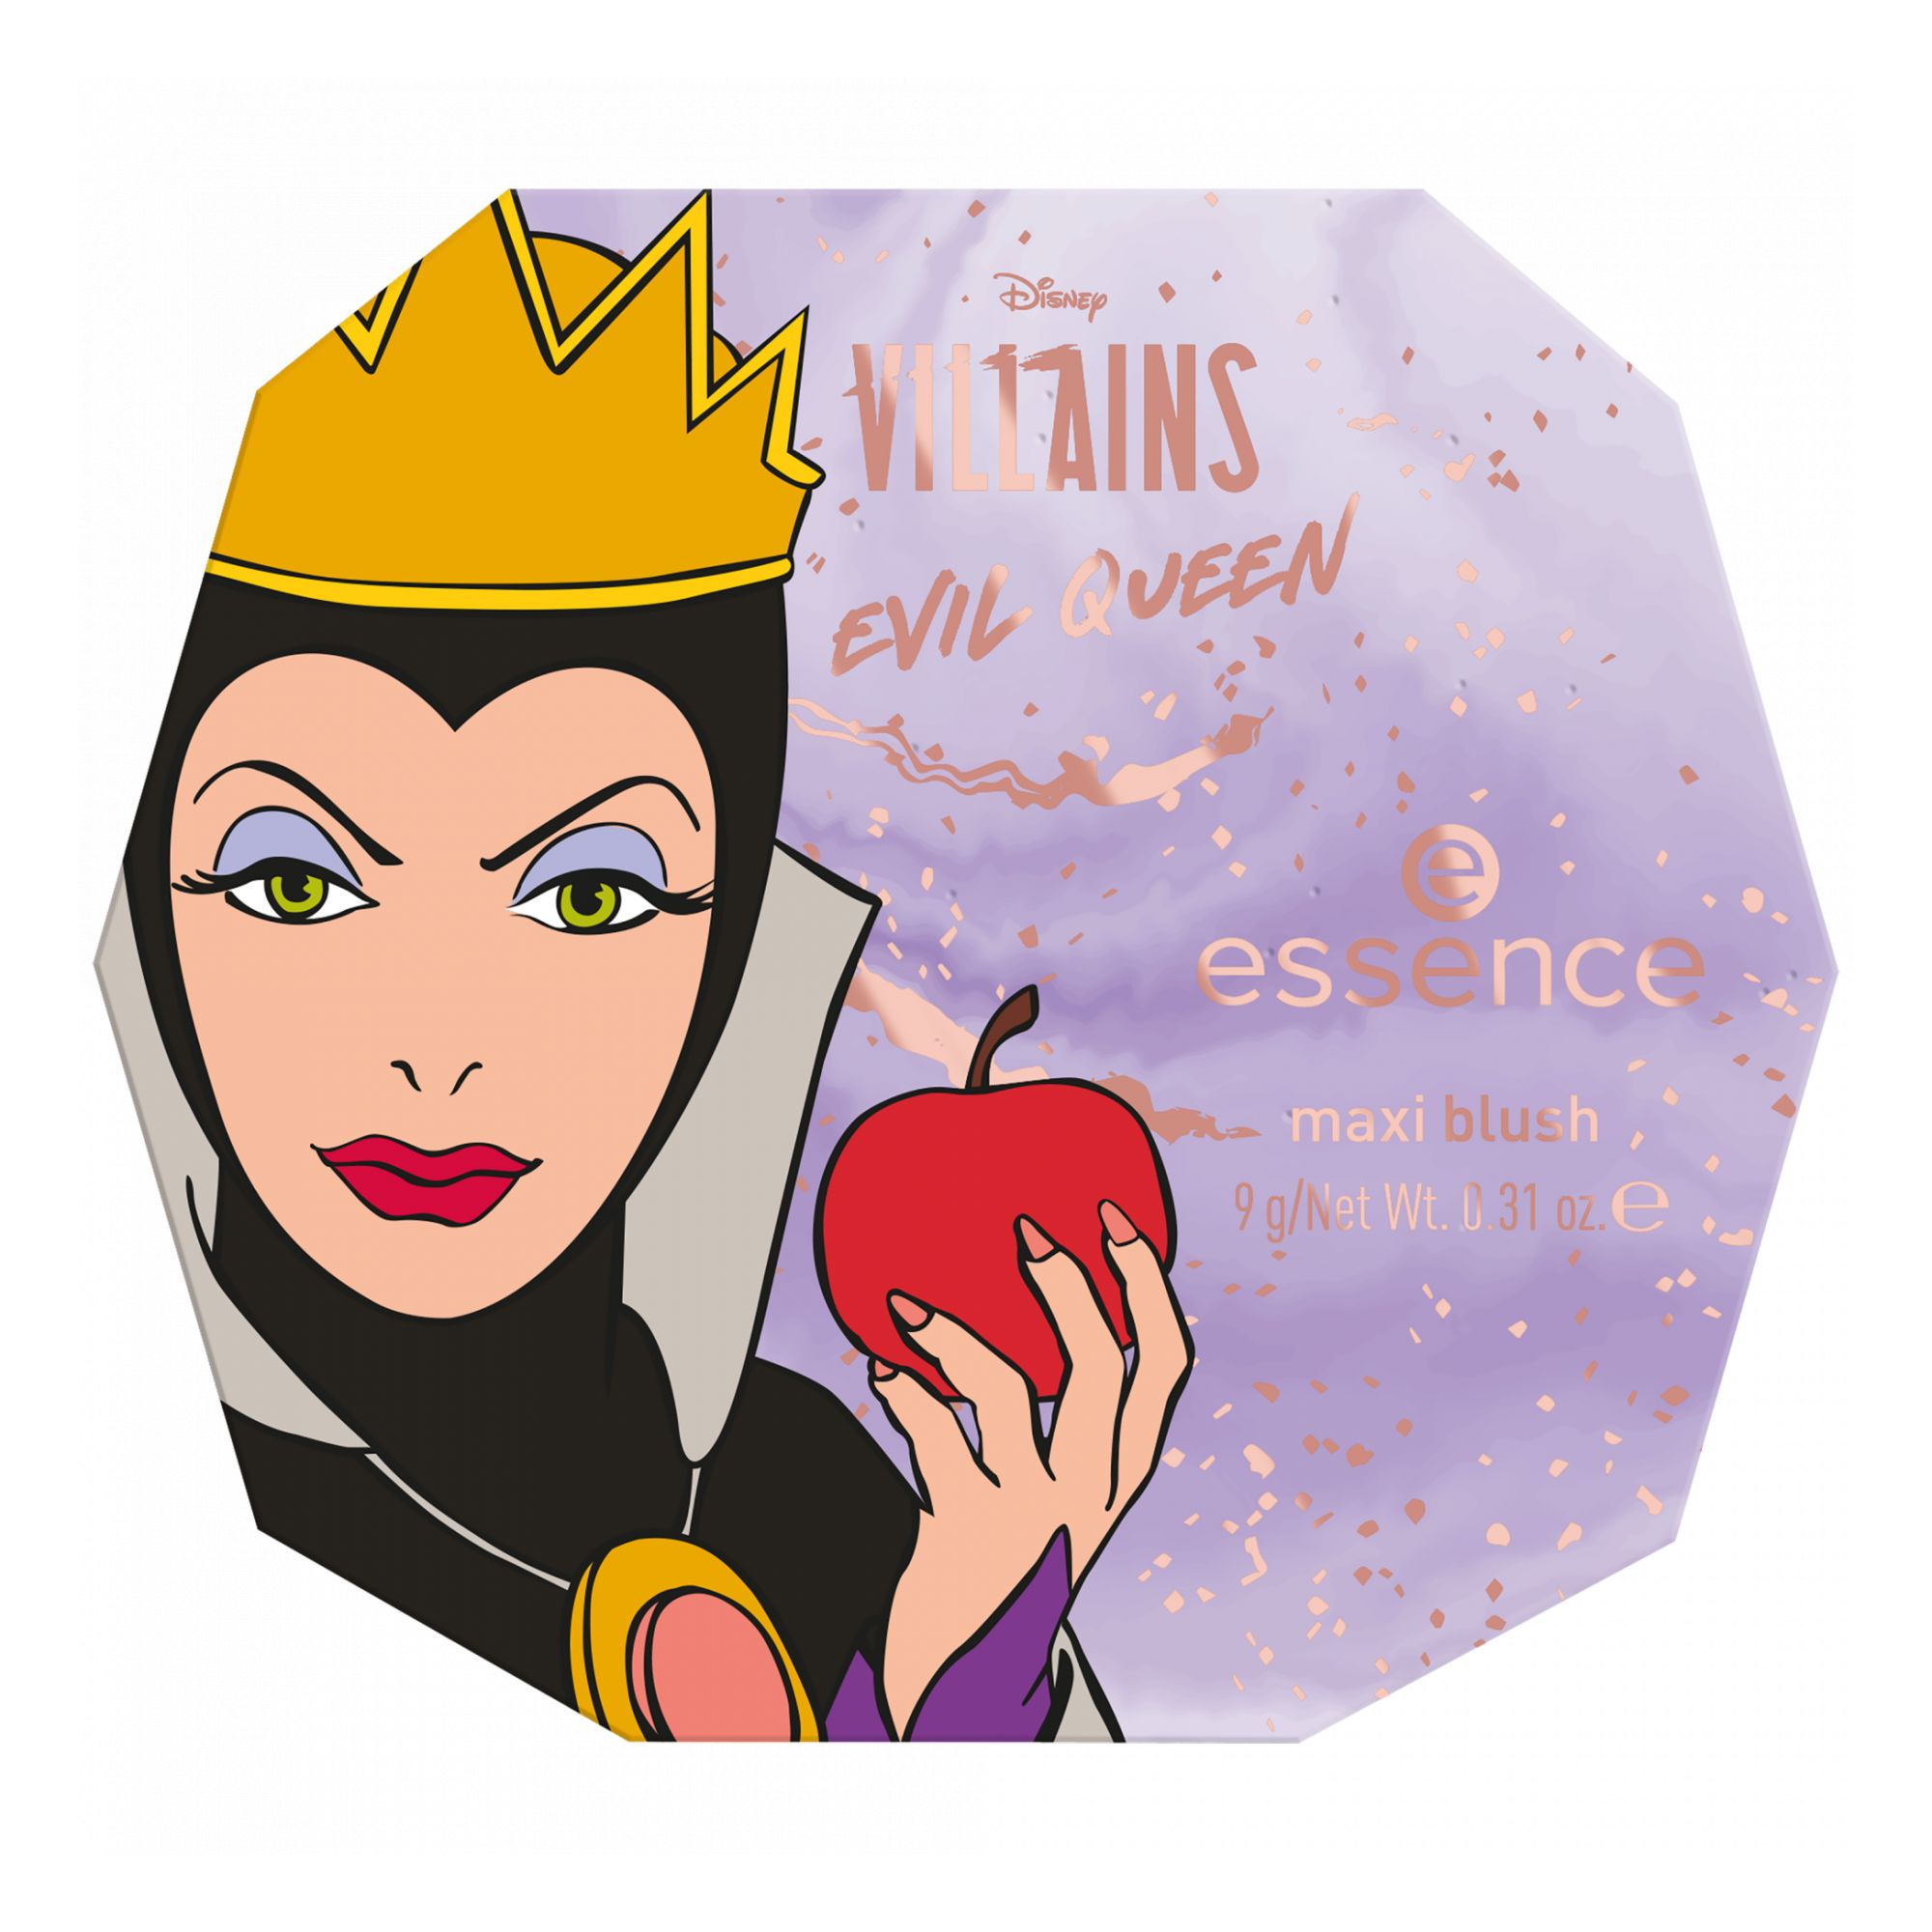 Disney Villains - Evil Queen Maxi Blush